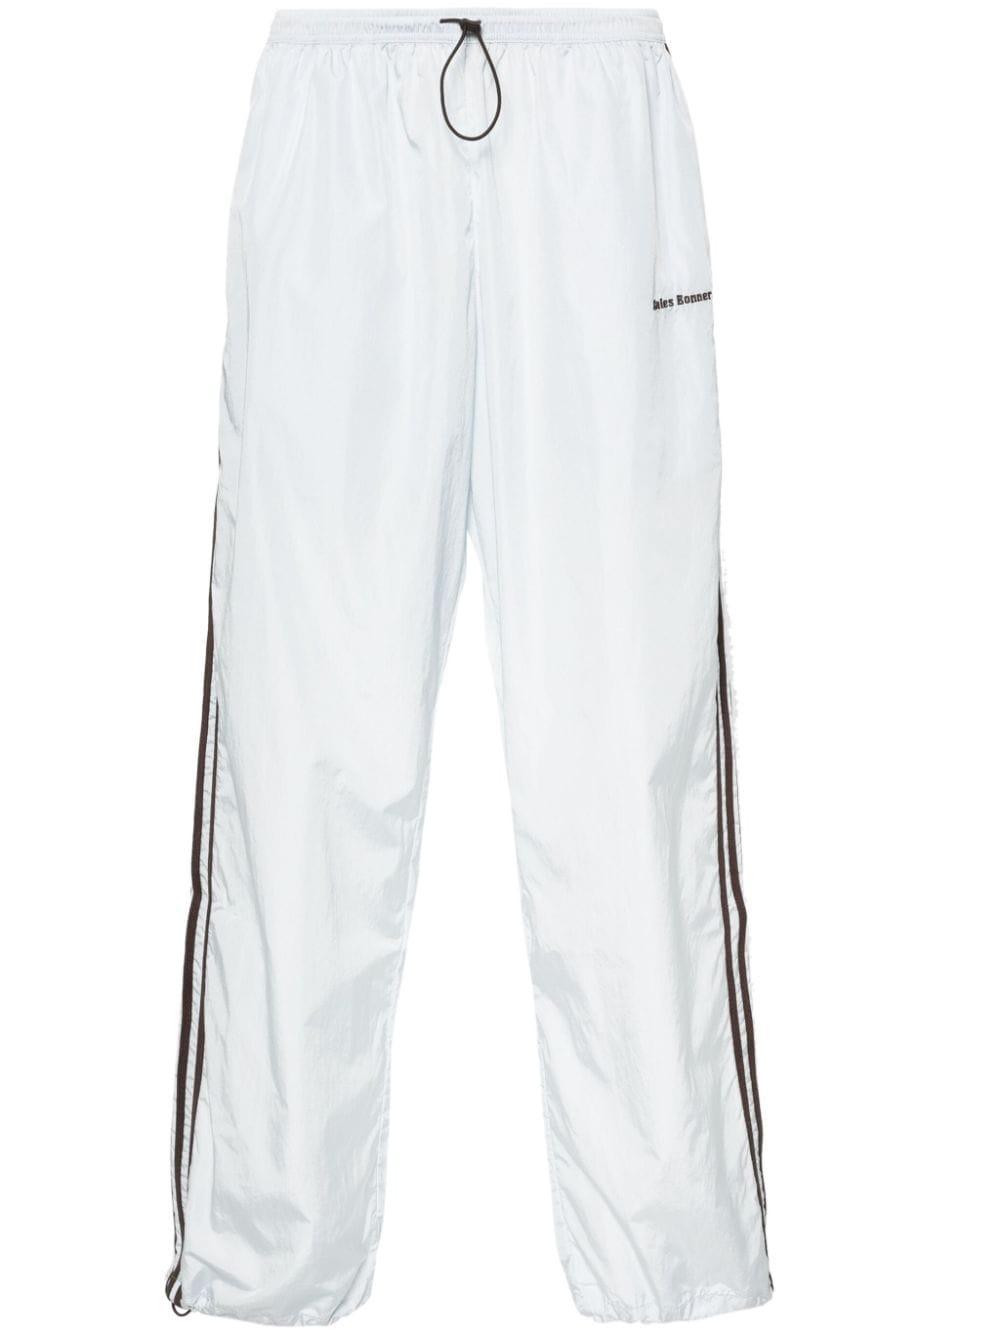 X Wales Bonner pantalon de jogging adidas en coloris Blanc | Lyst